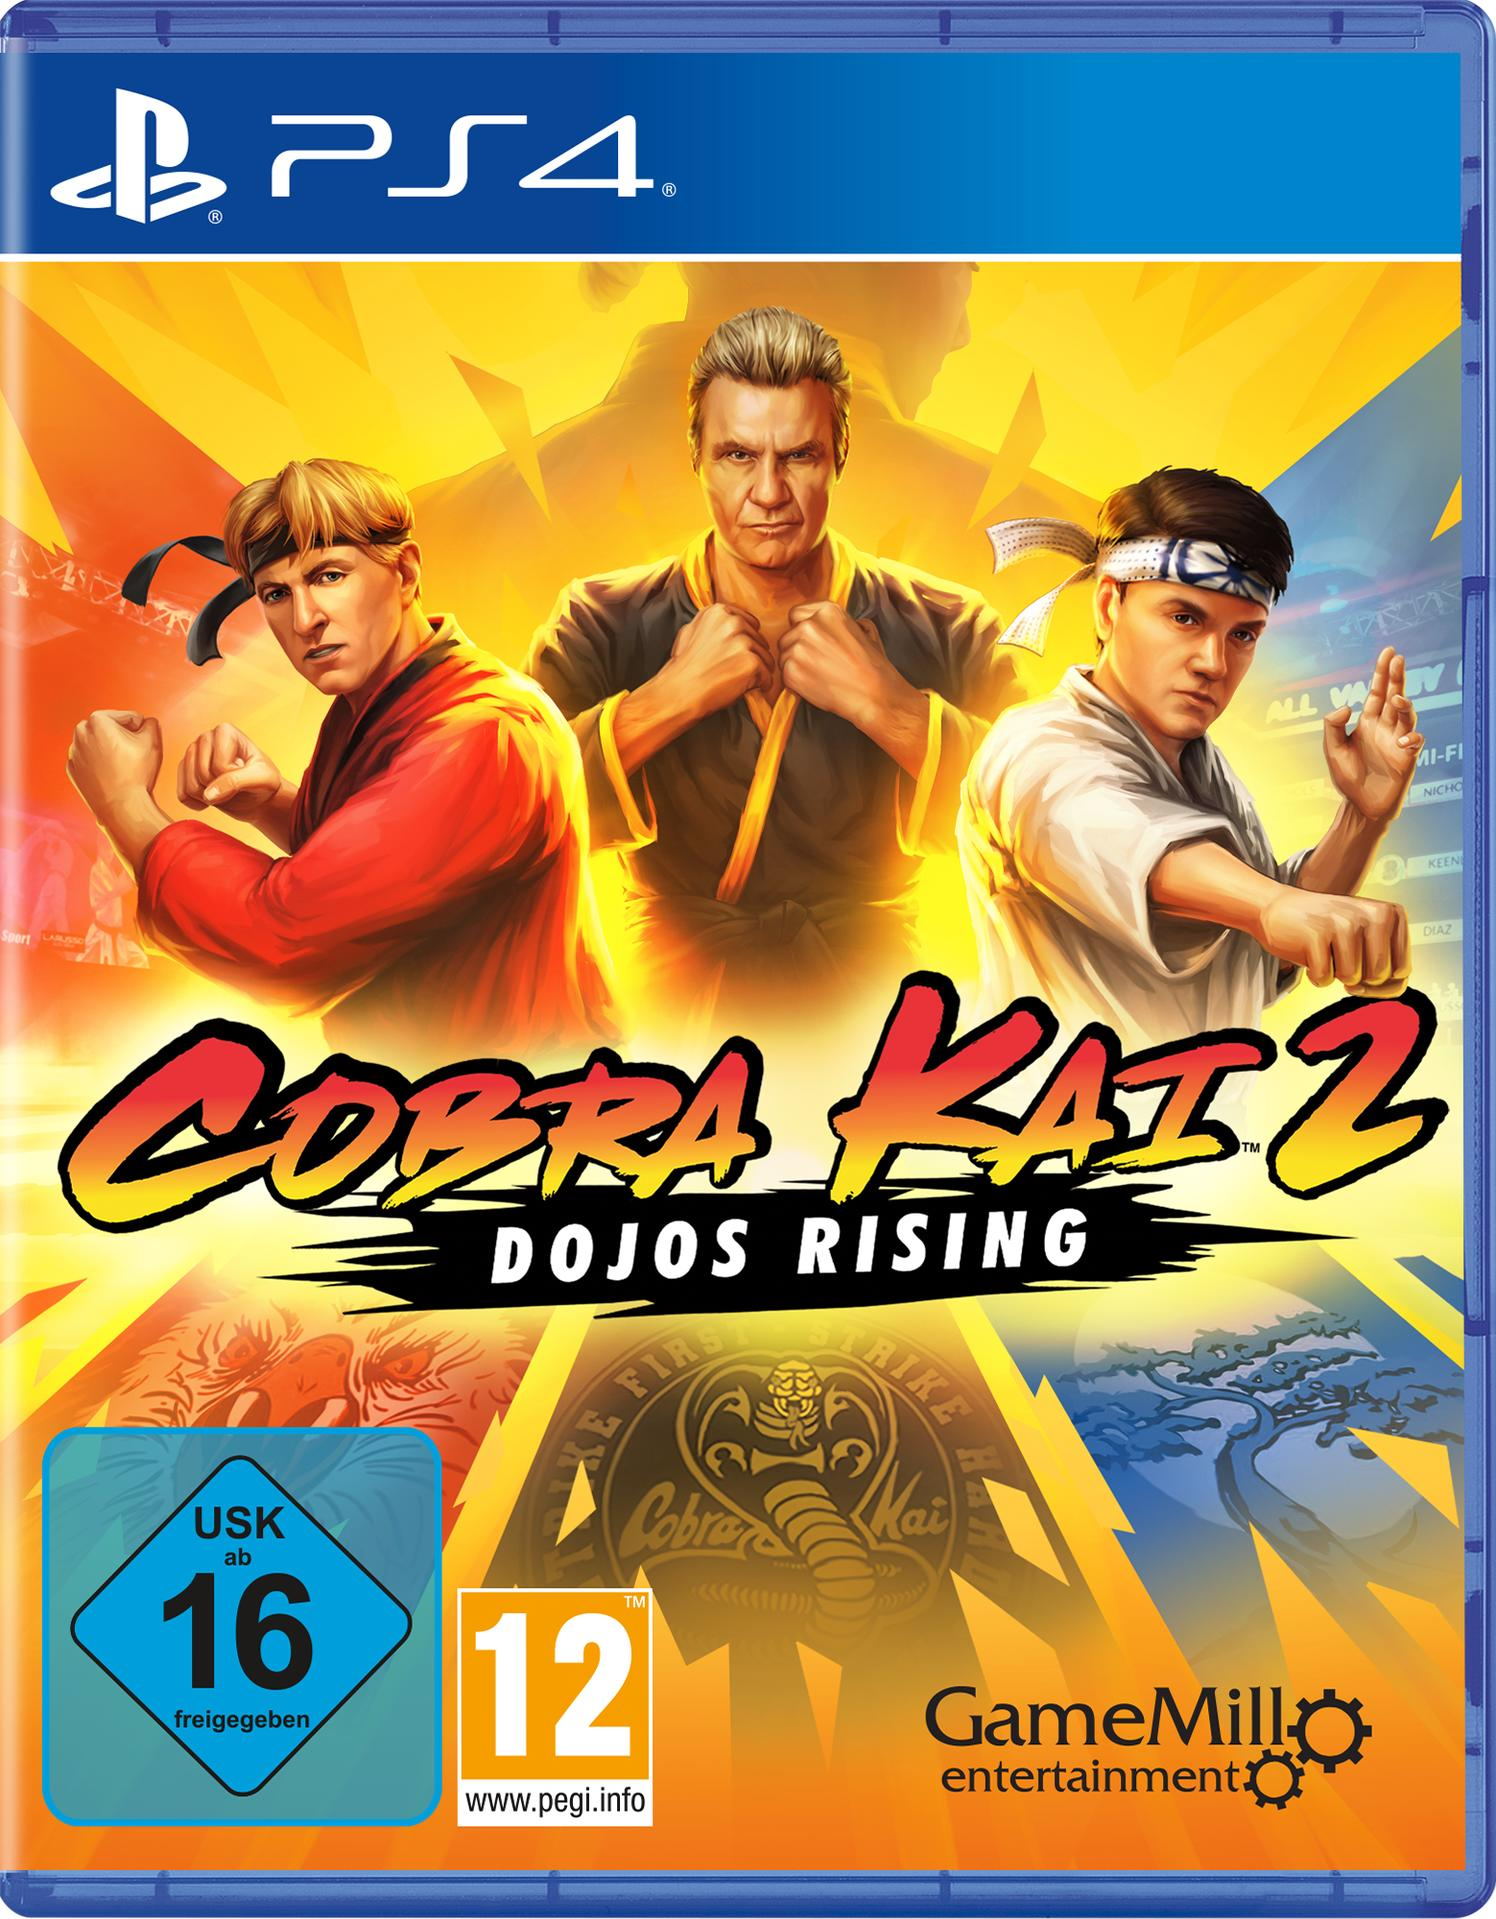 Cobra Kai 2: Dojos - 4] Rising [PlayStation